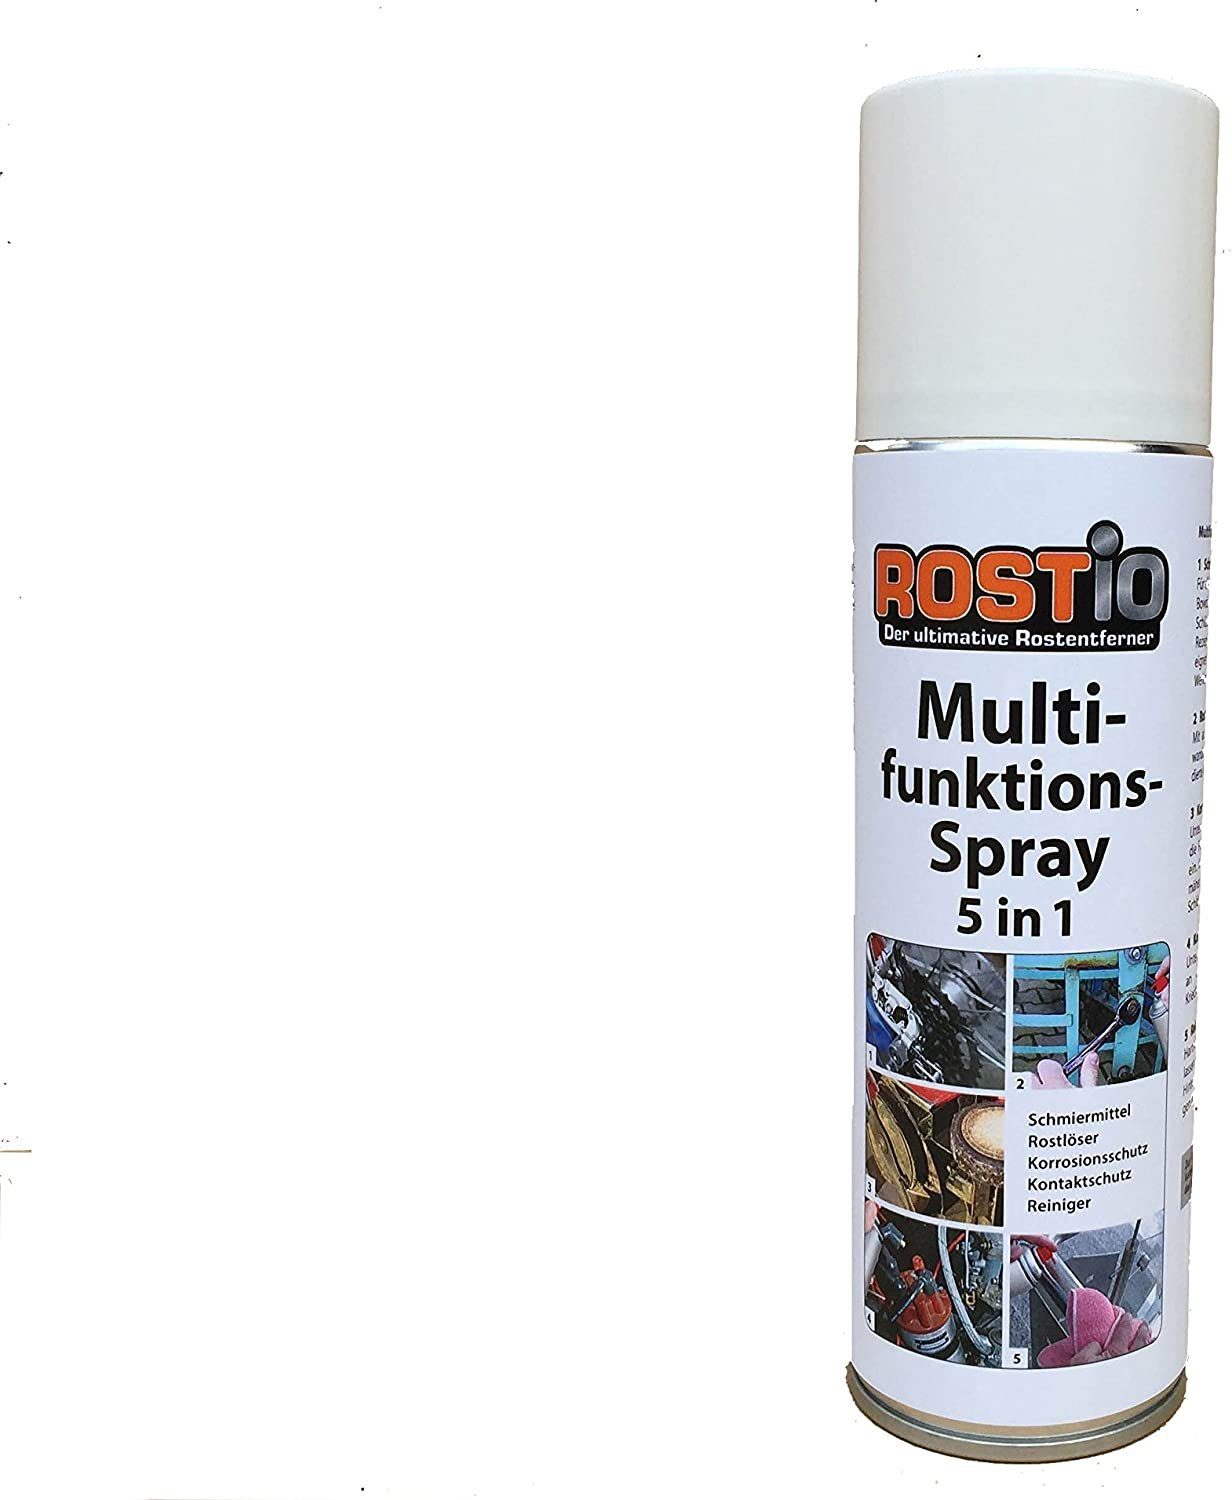 Rostio Multifunktionsspray 5 in Rostentferner 1 Mutifunktionsöl